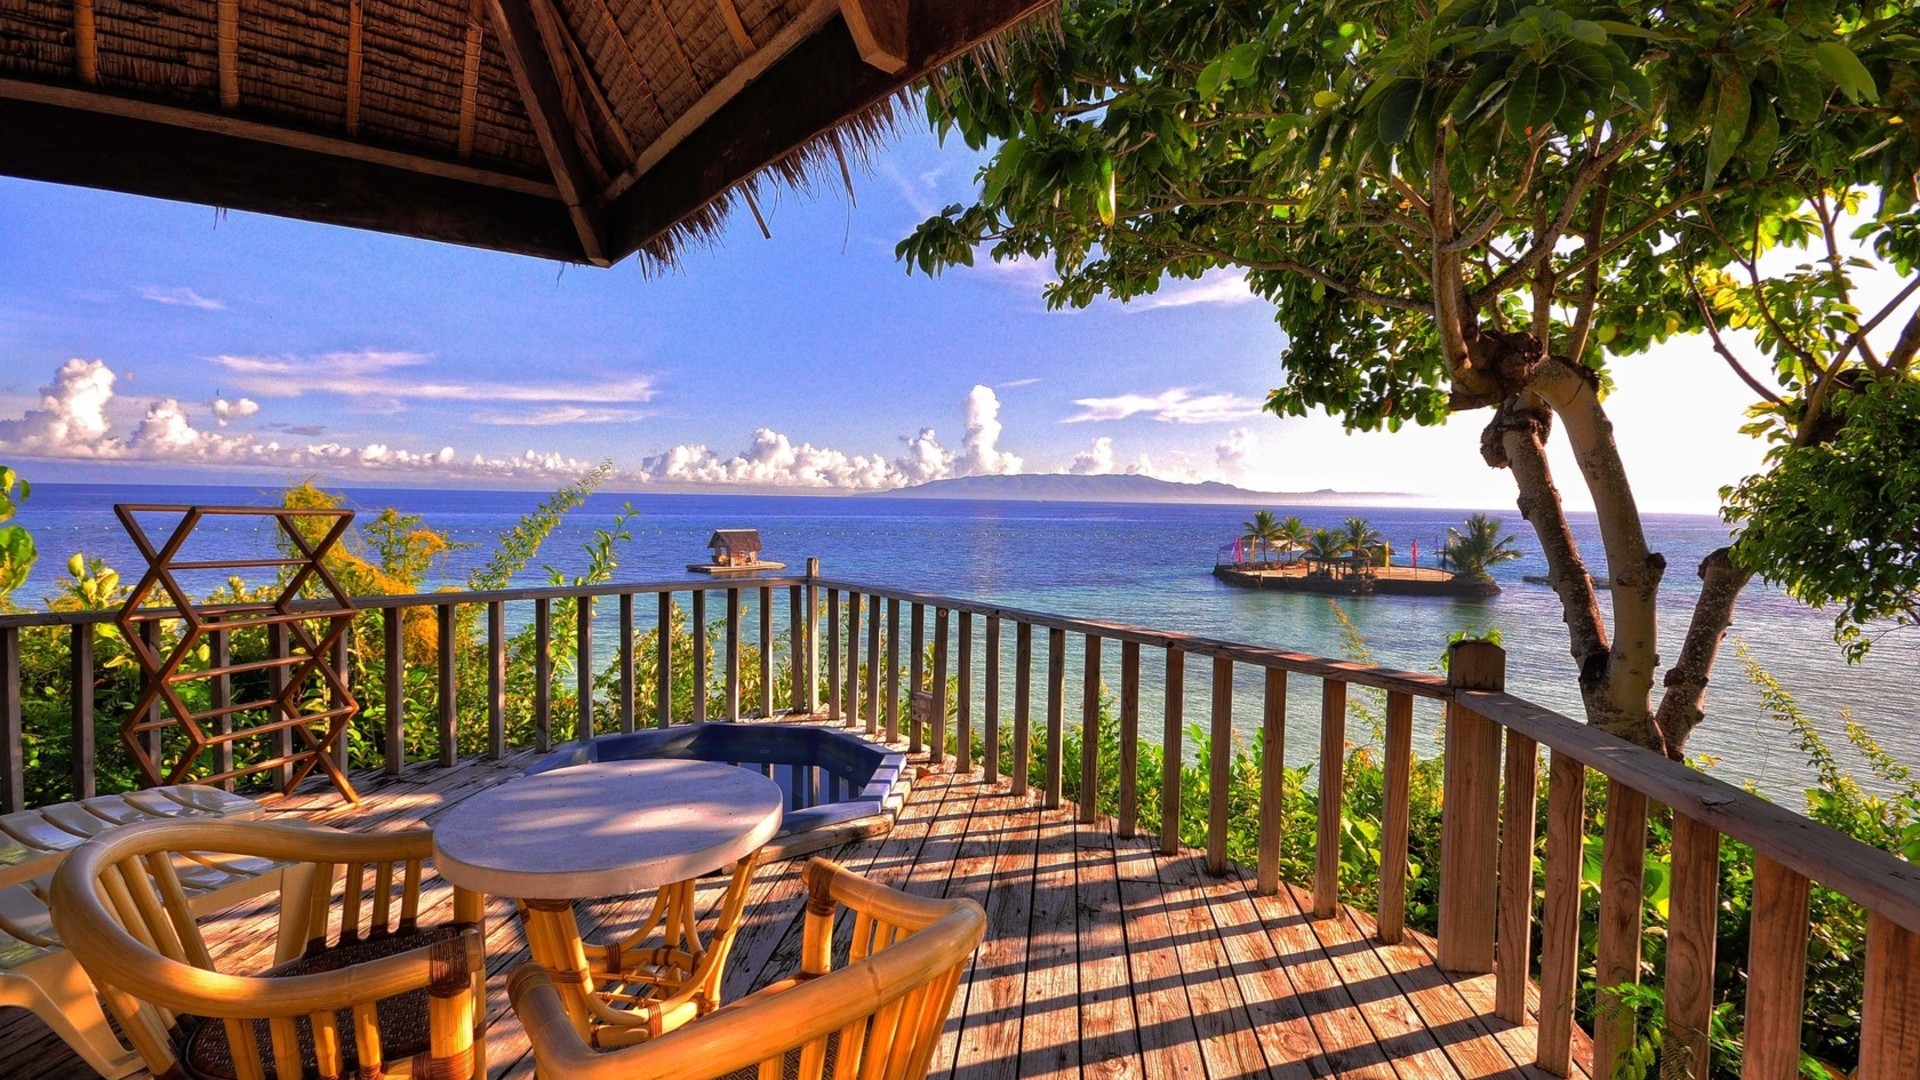 resort, man made, island, ocean, terrace wallpaper for mobile